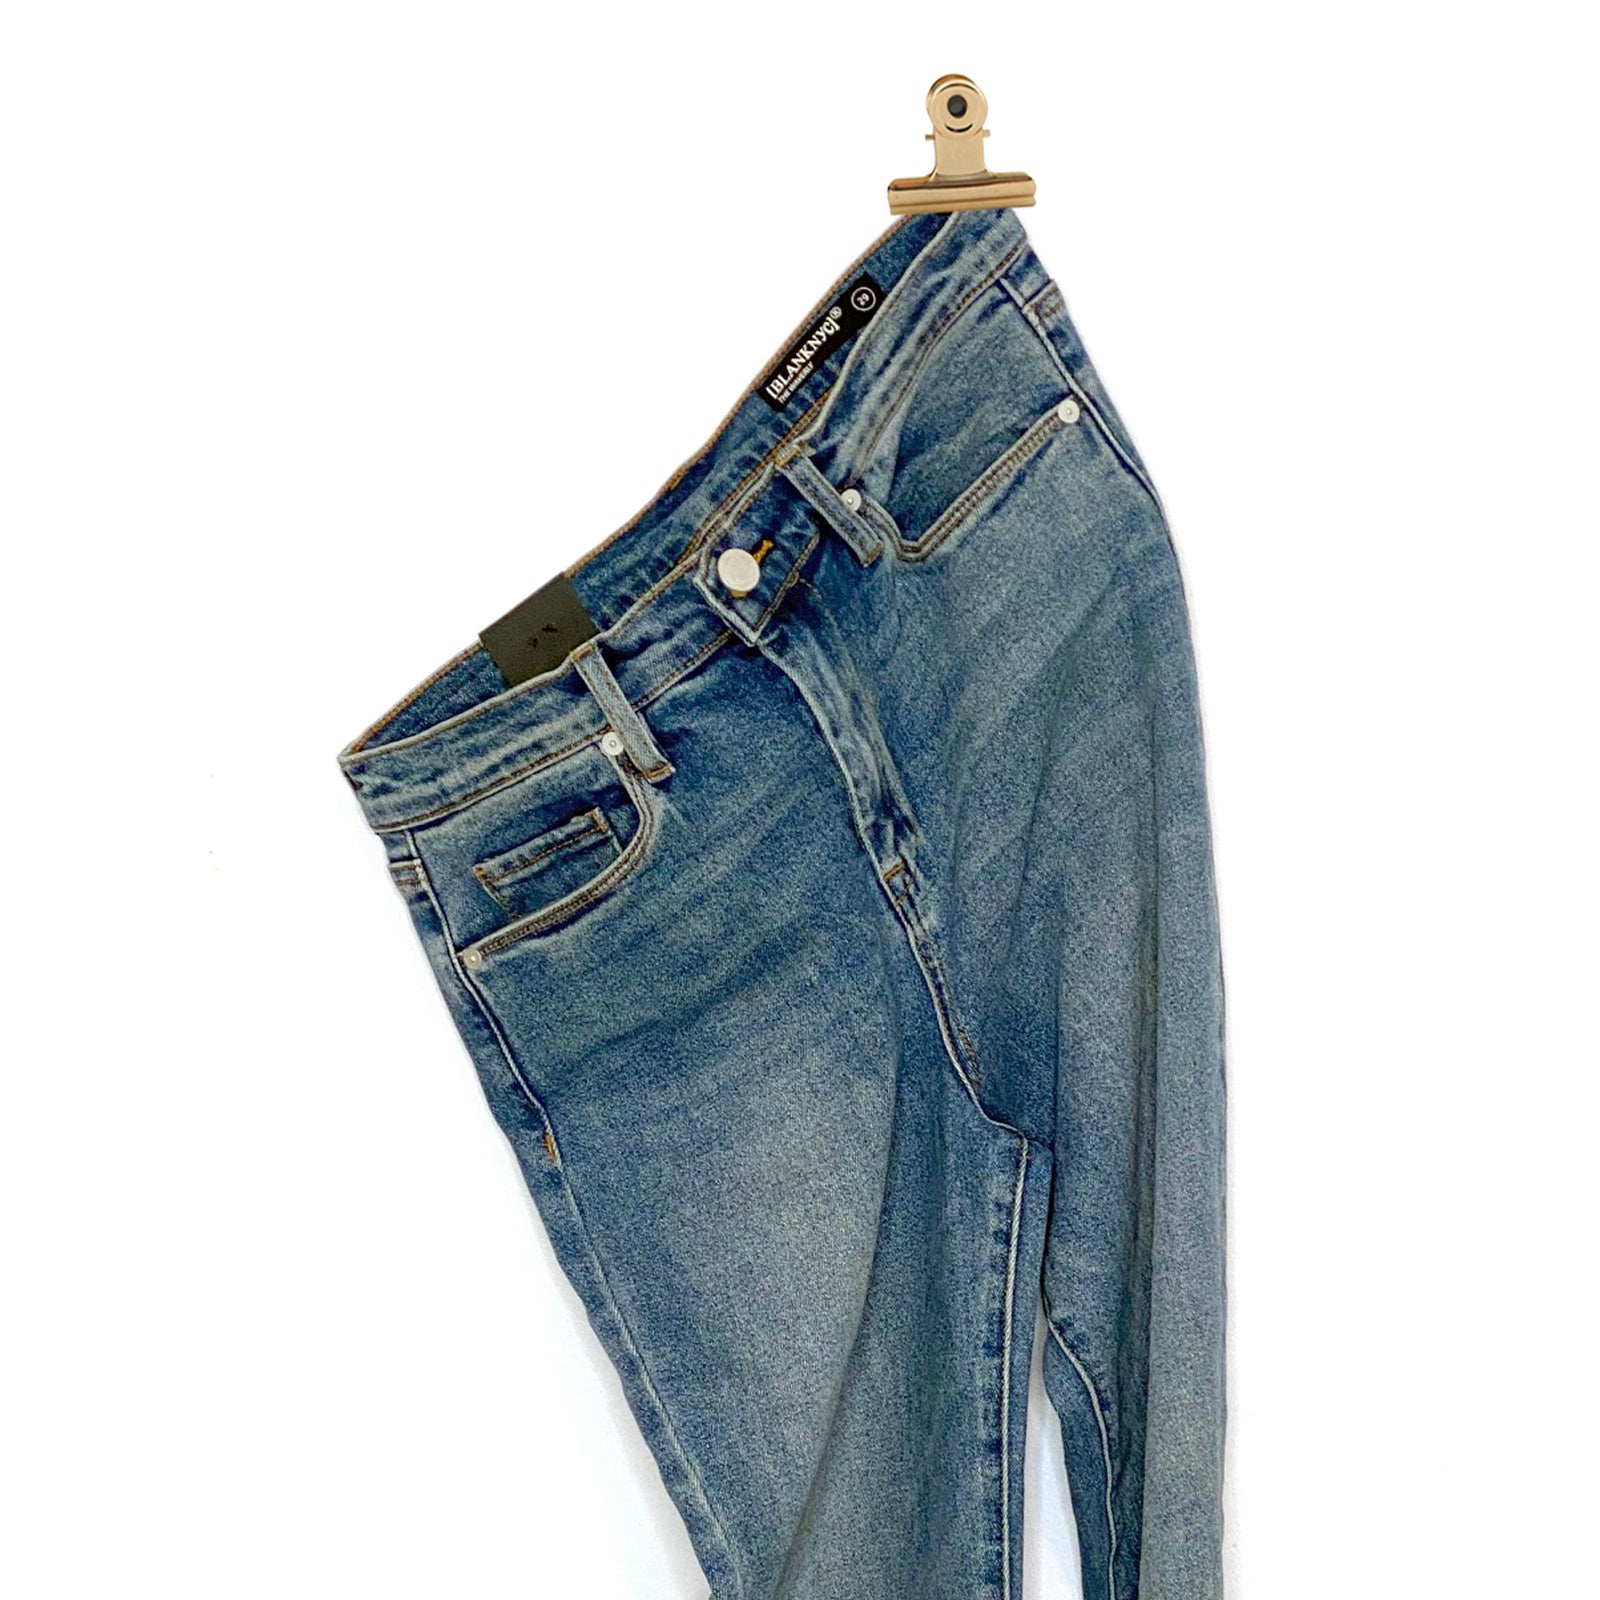 Starburst Jeans - wide leg